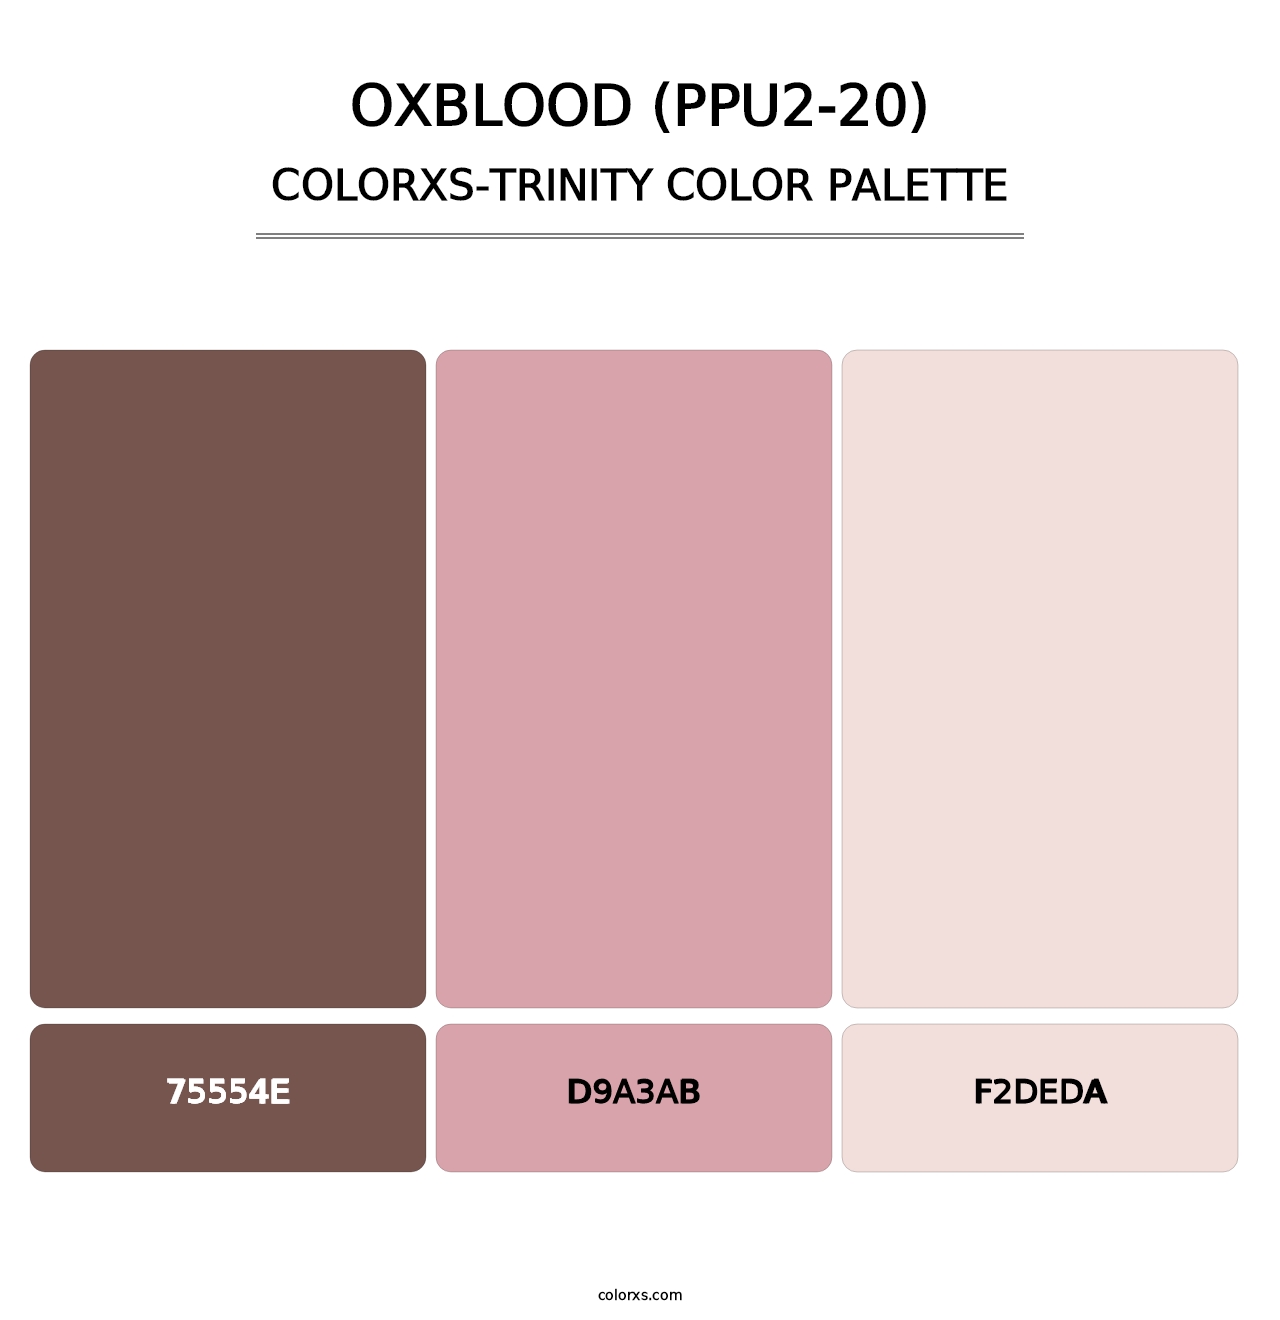 Oxblood (PPU2-20) - Colorxs Trinity Palette